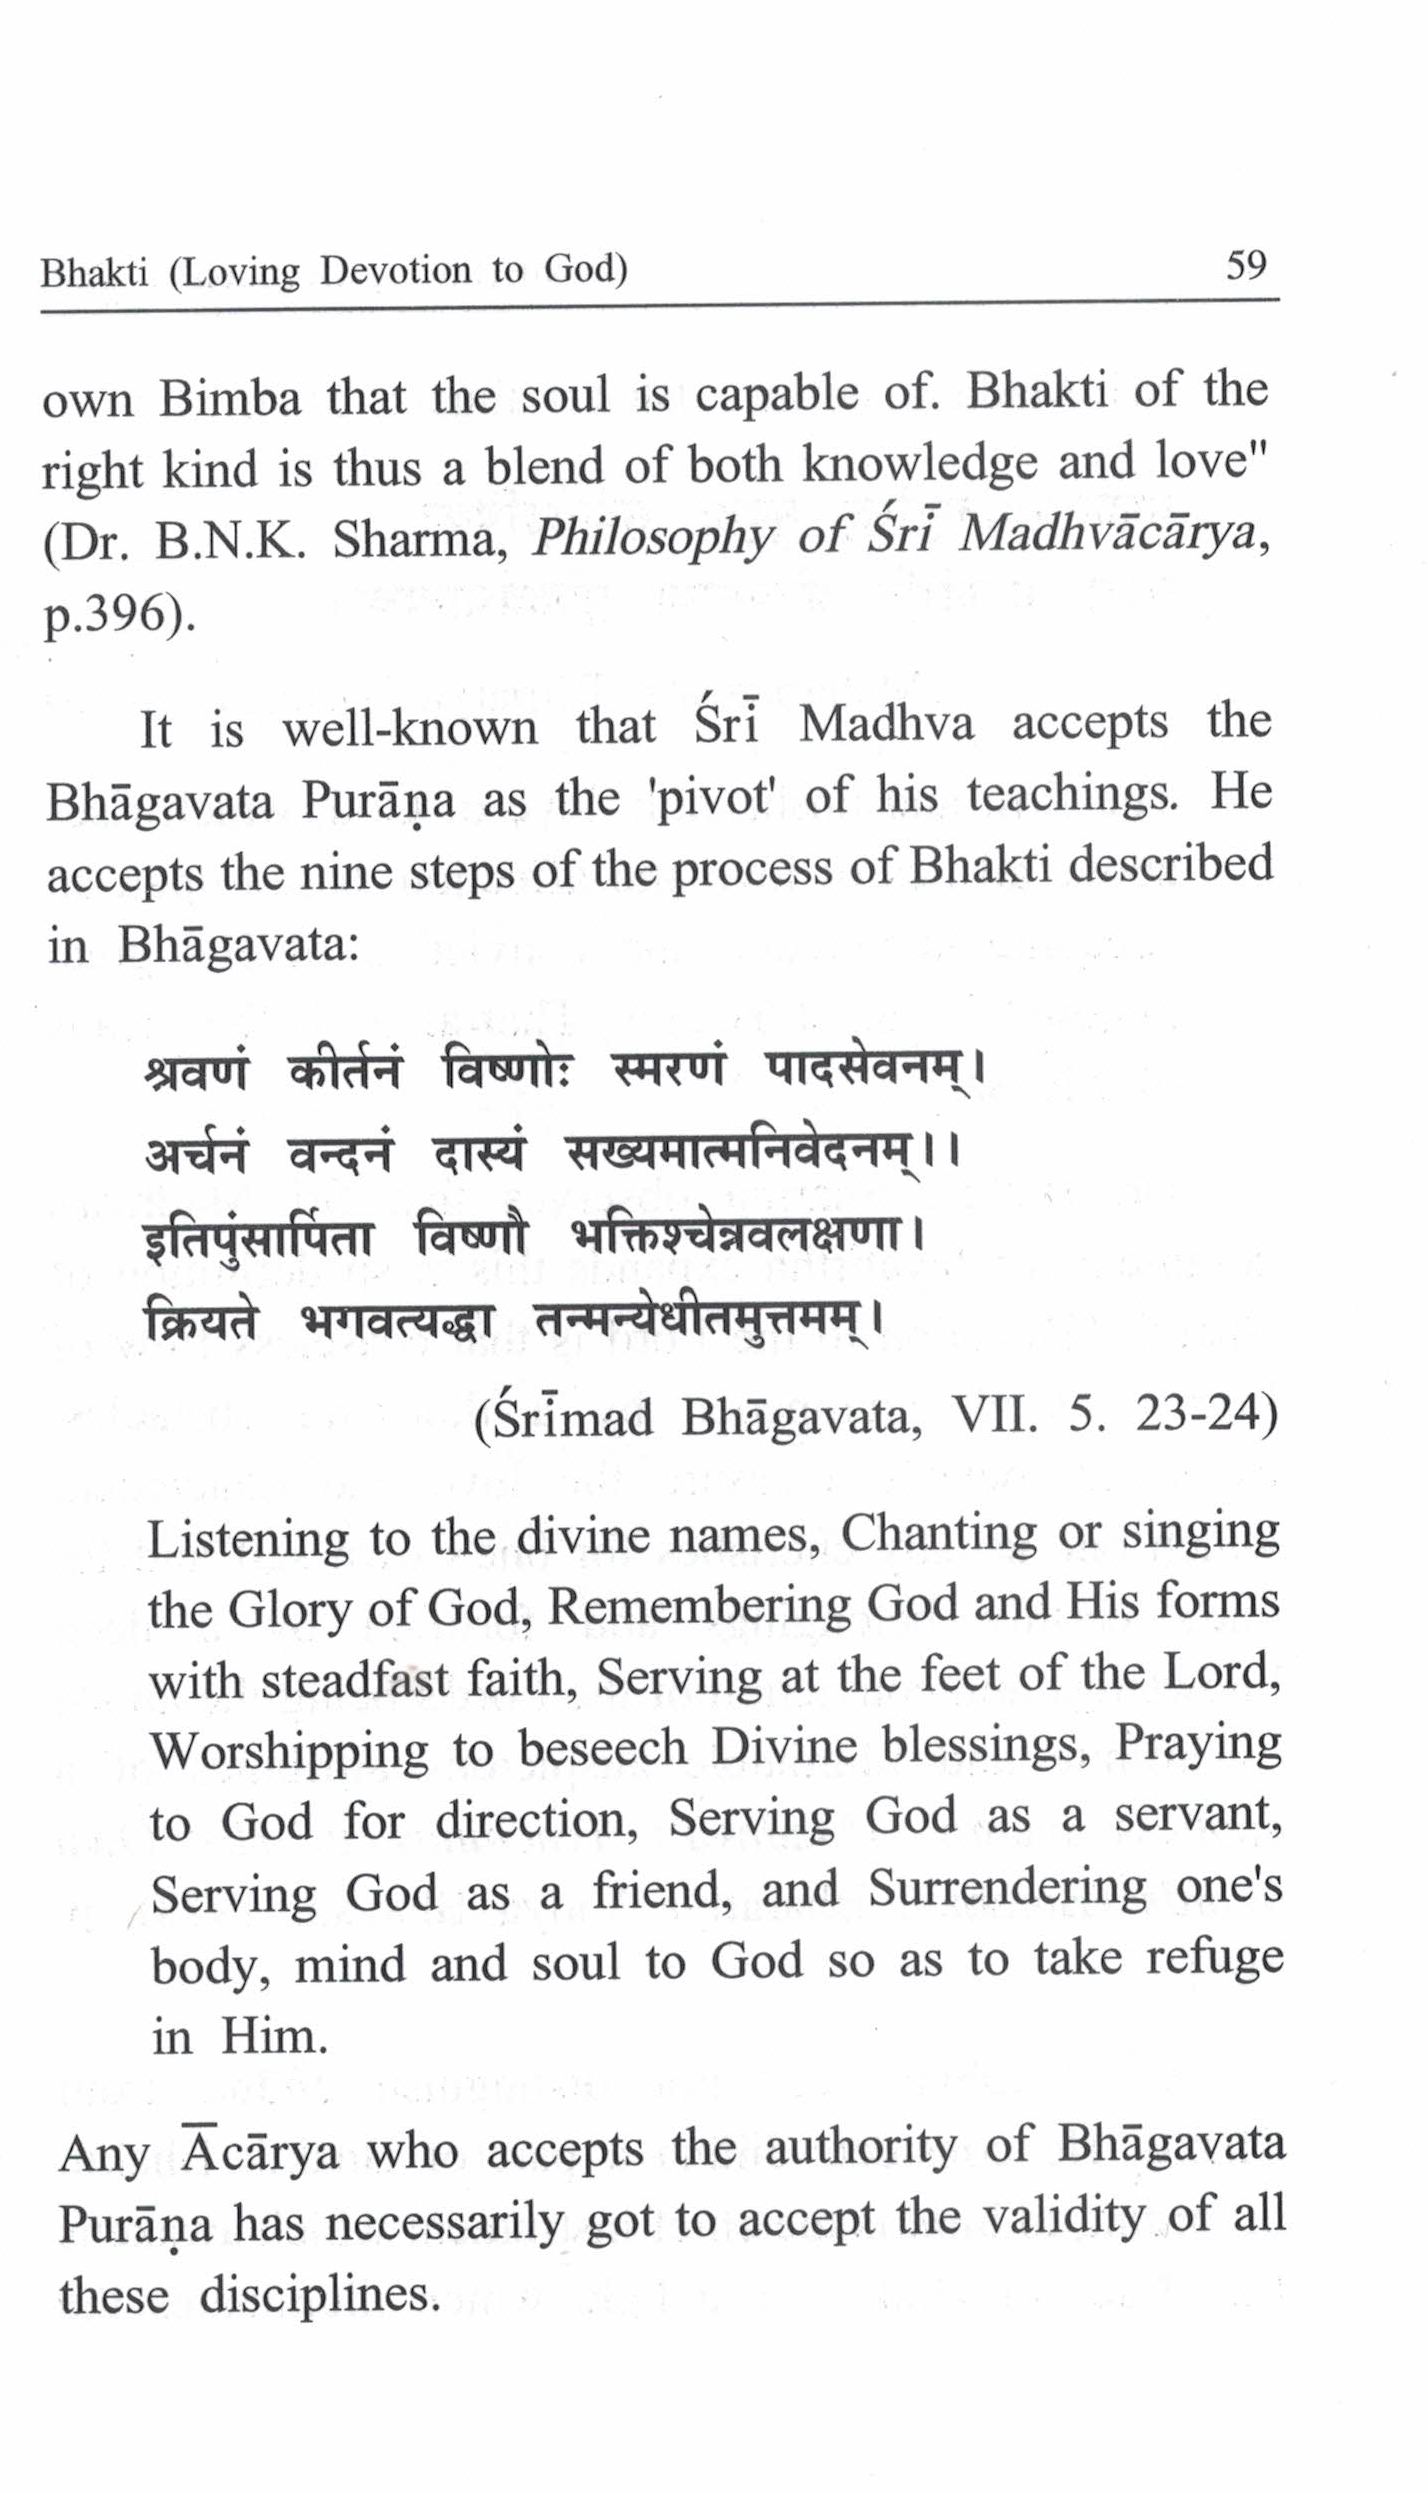 Bhakti - Loving Devotion to God